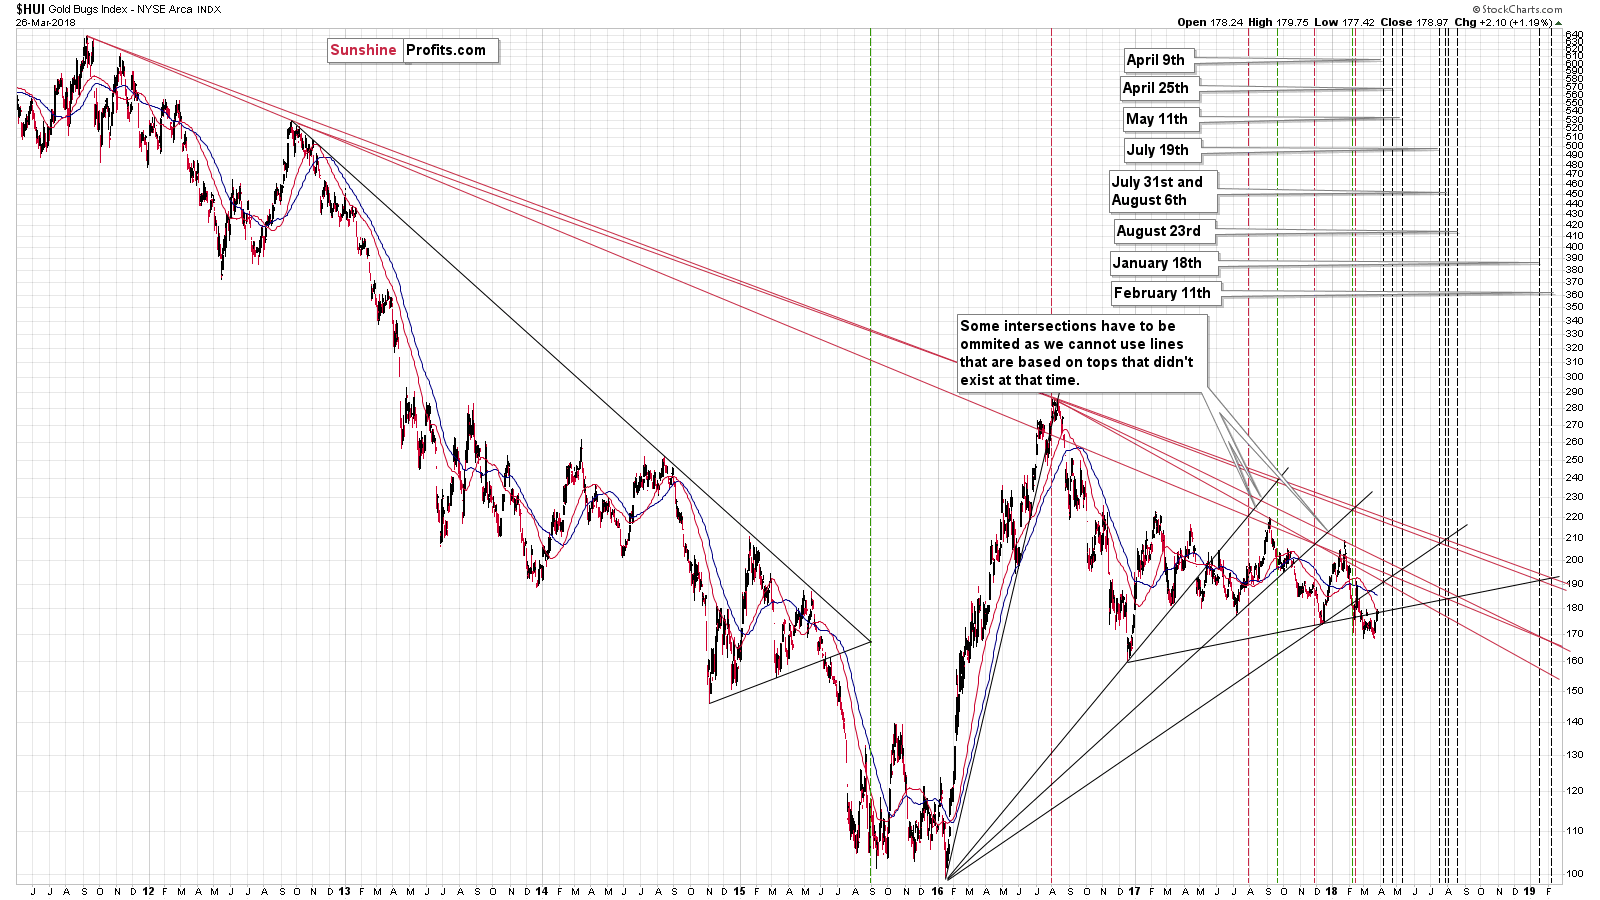 Gold stocks (HUI) - Triangle apex reversal